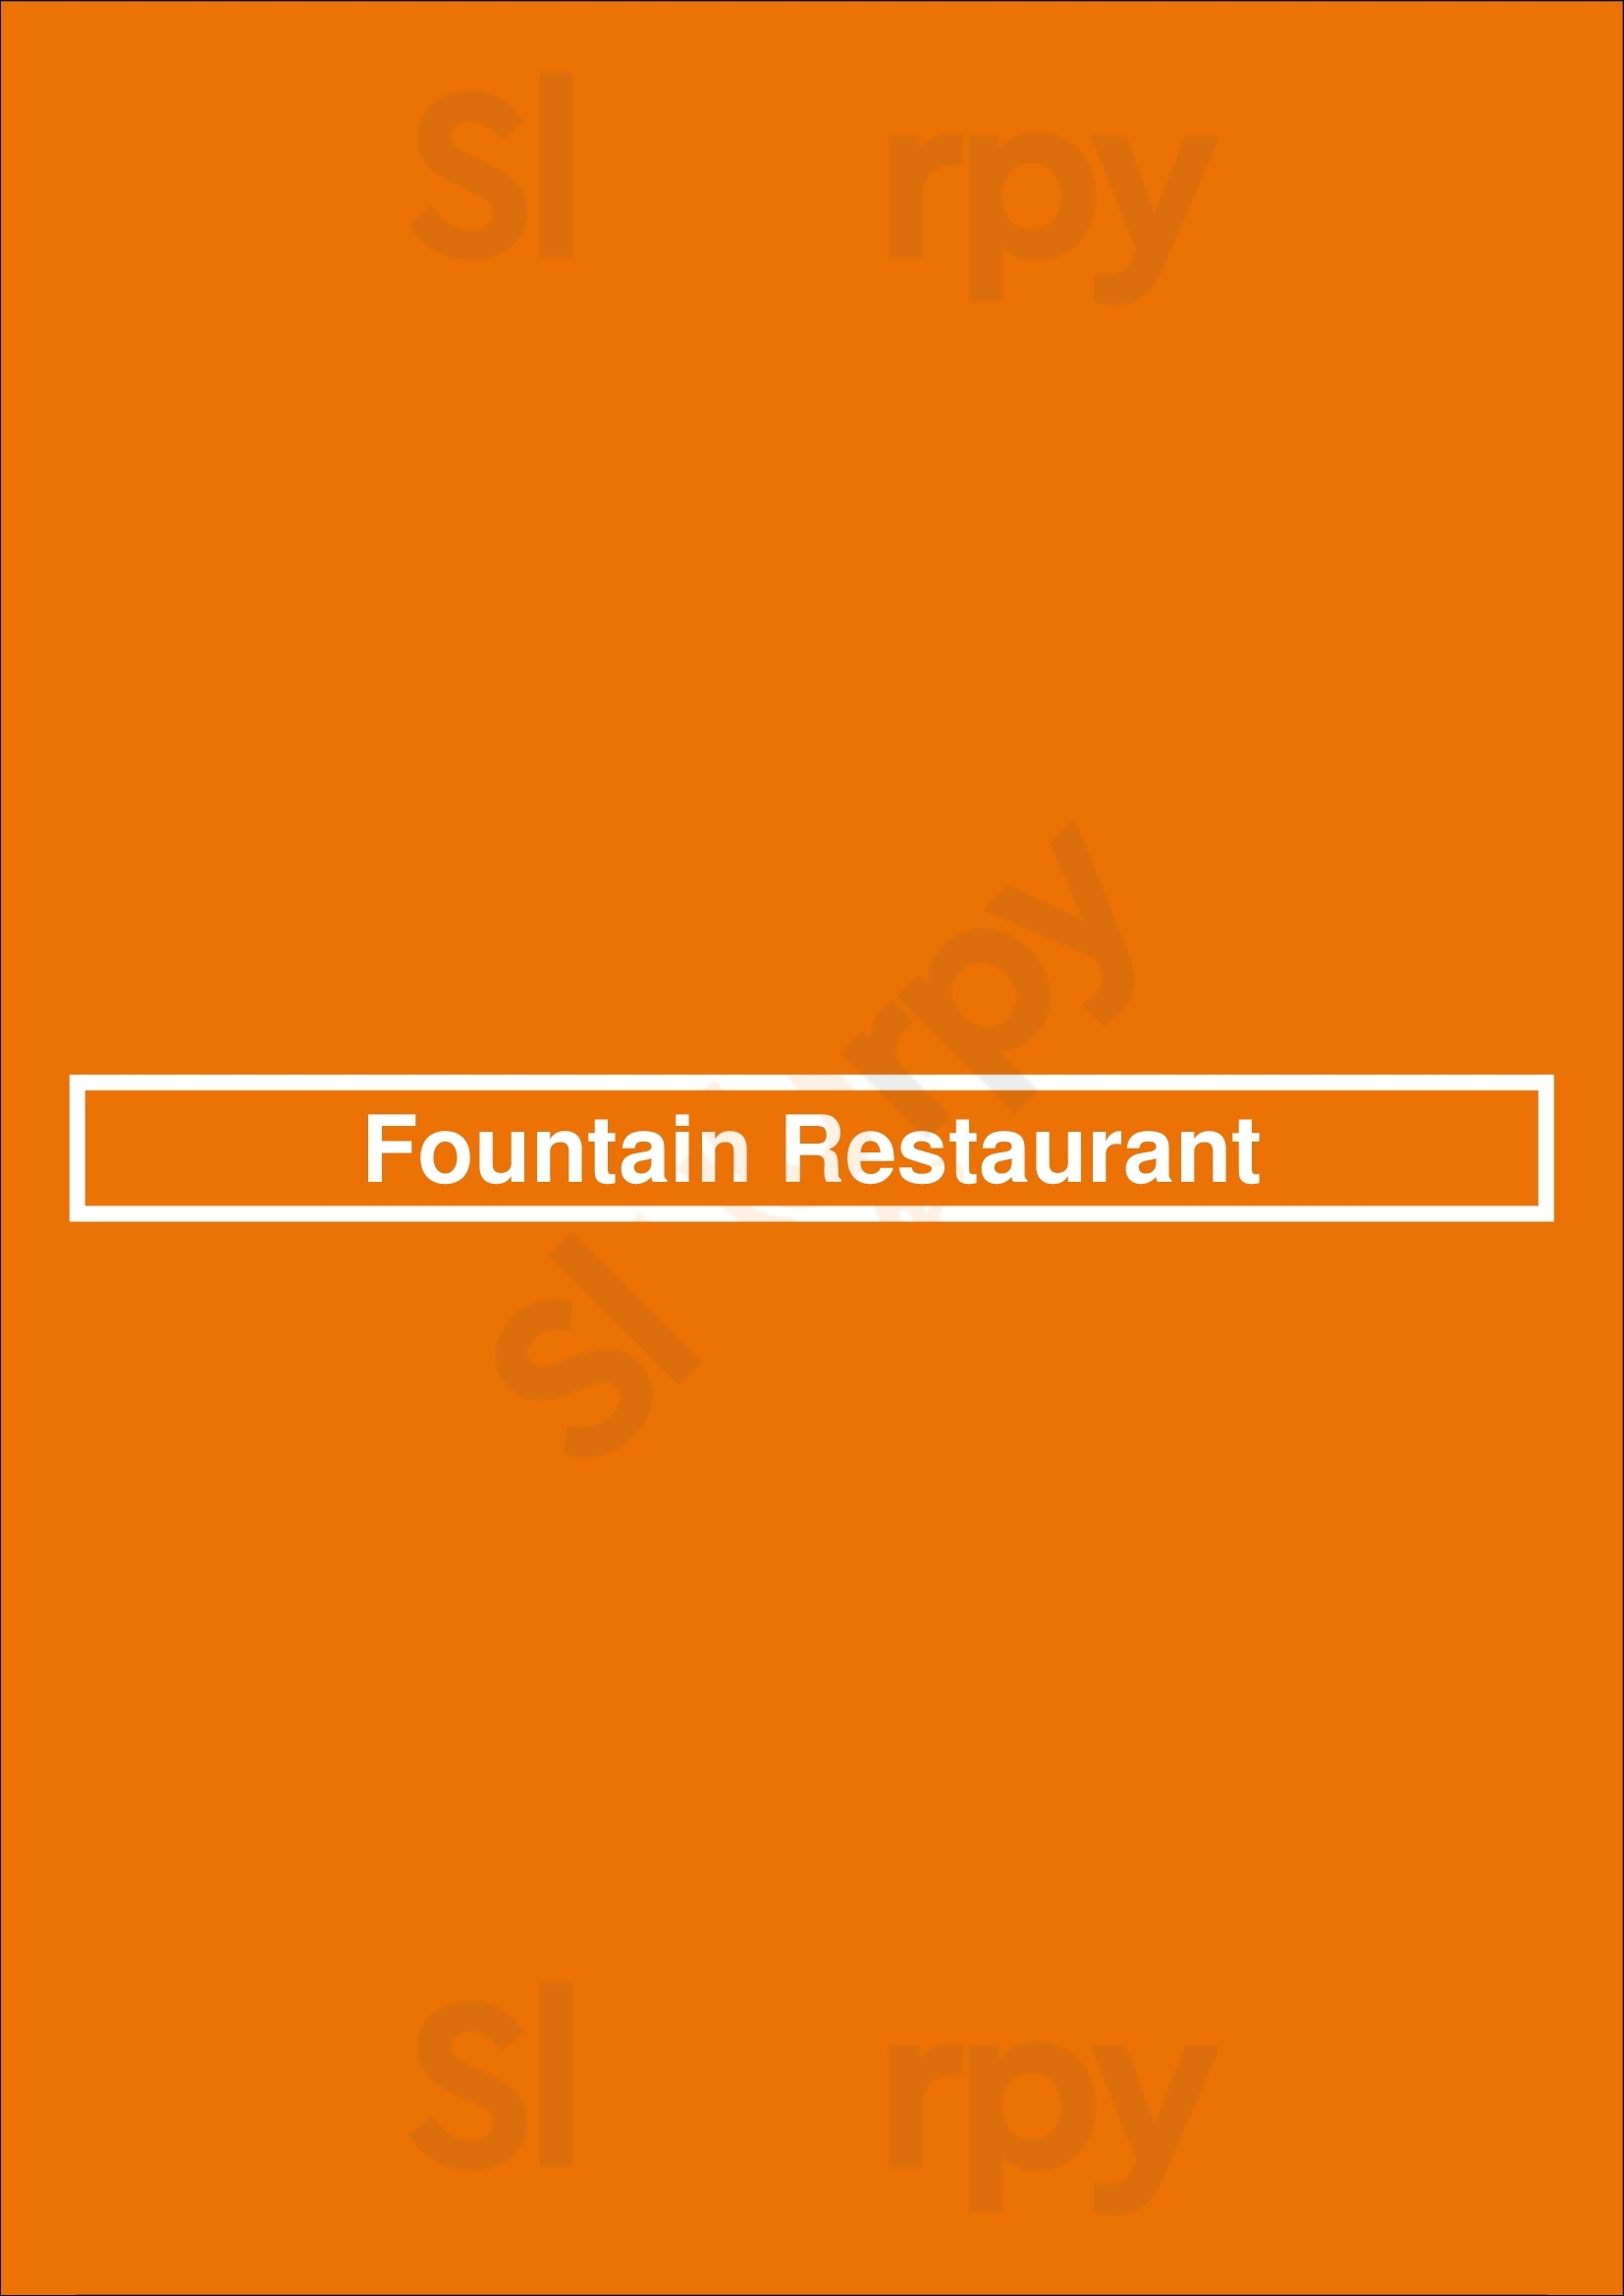 Fountain Restaurant Albany Menu - 1